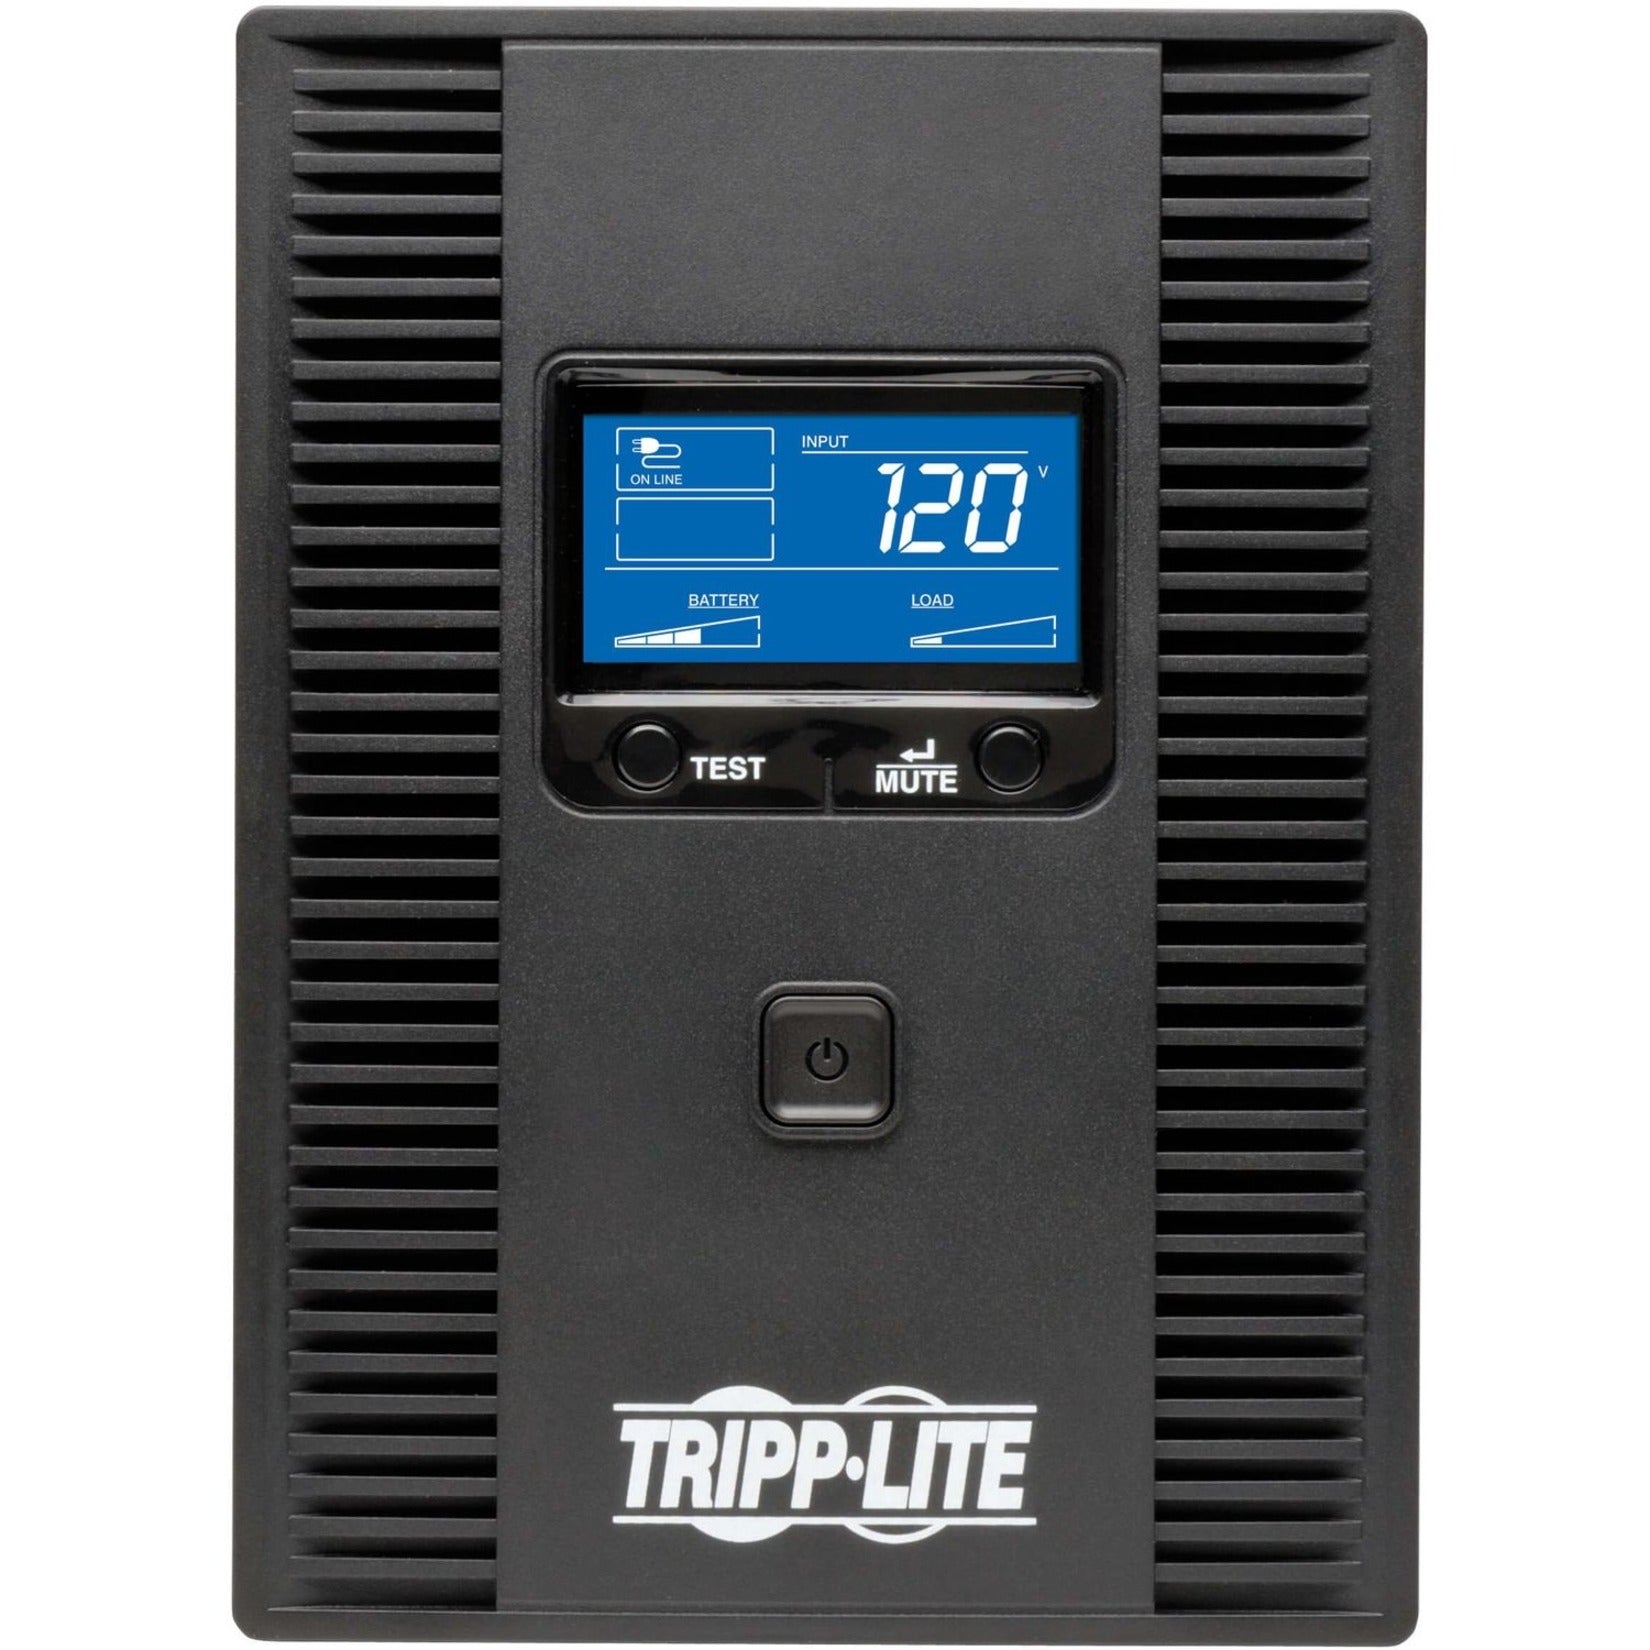 Tripp Lite OMNI1500LCDT OmniSmart 1500VA Tower UPS, 3 Year Warranty, ENERGY STAR Certified